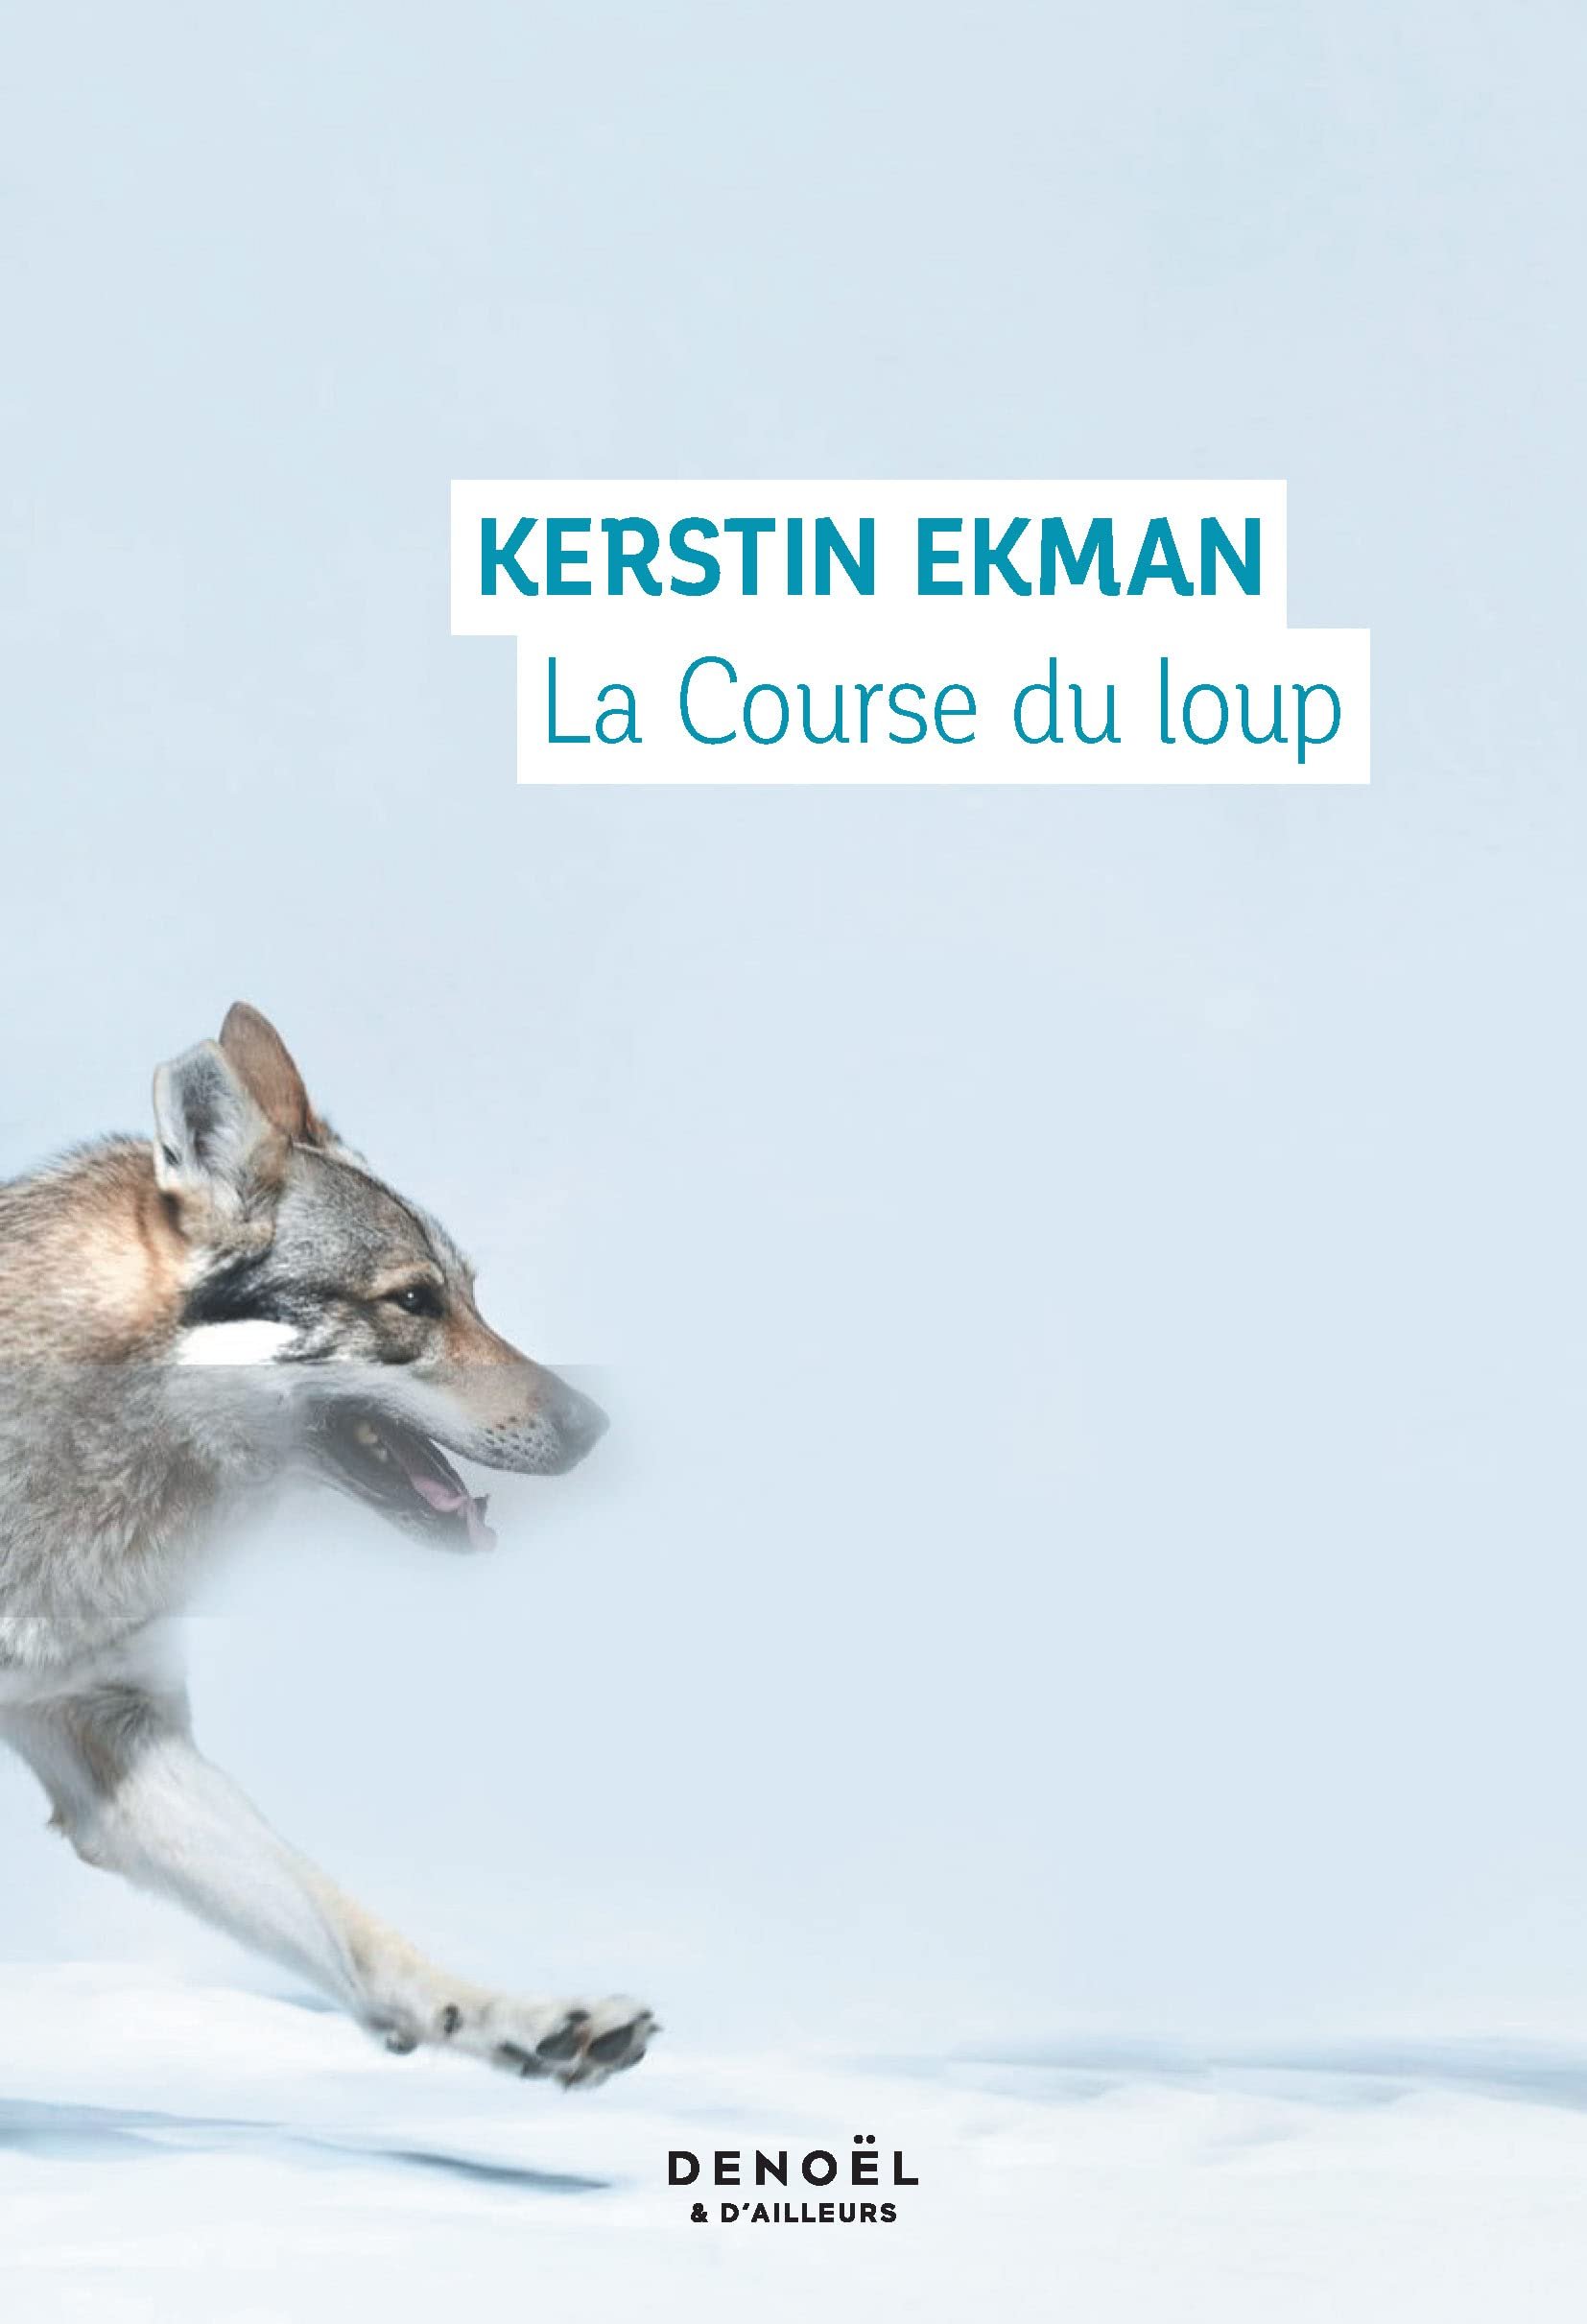 Kerstin Ekman – La course du loup